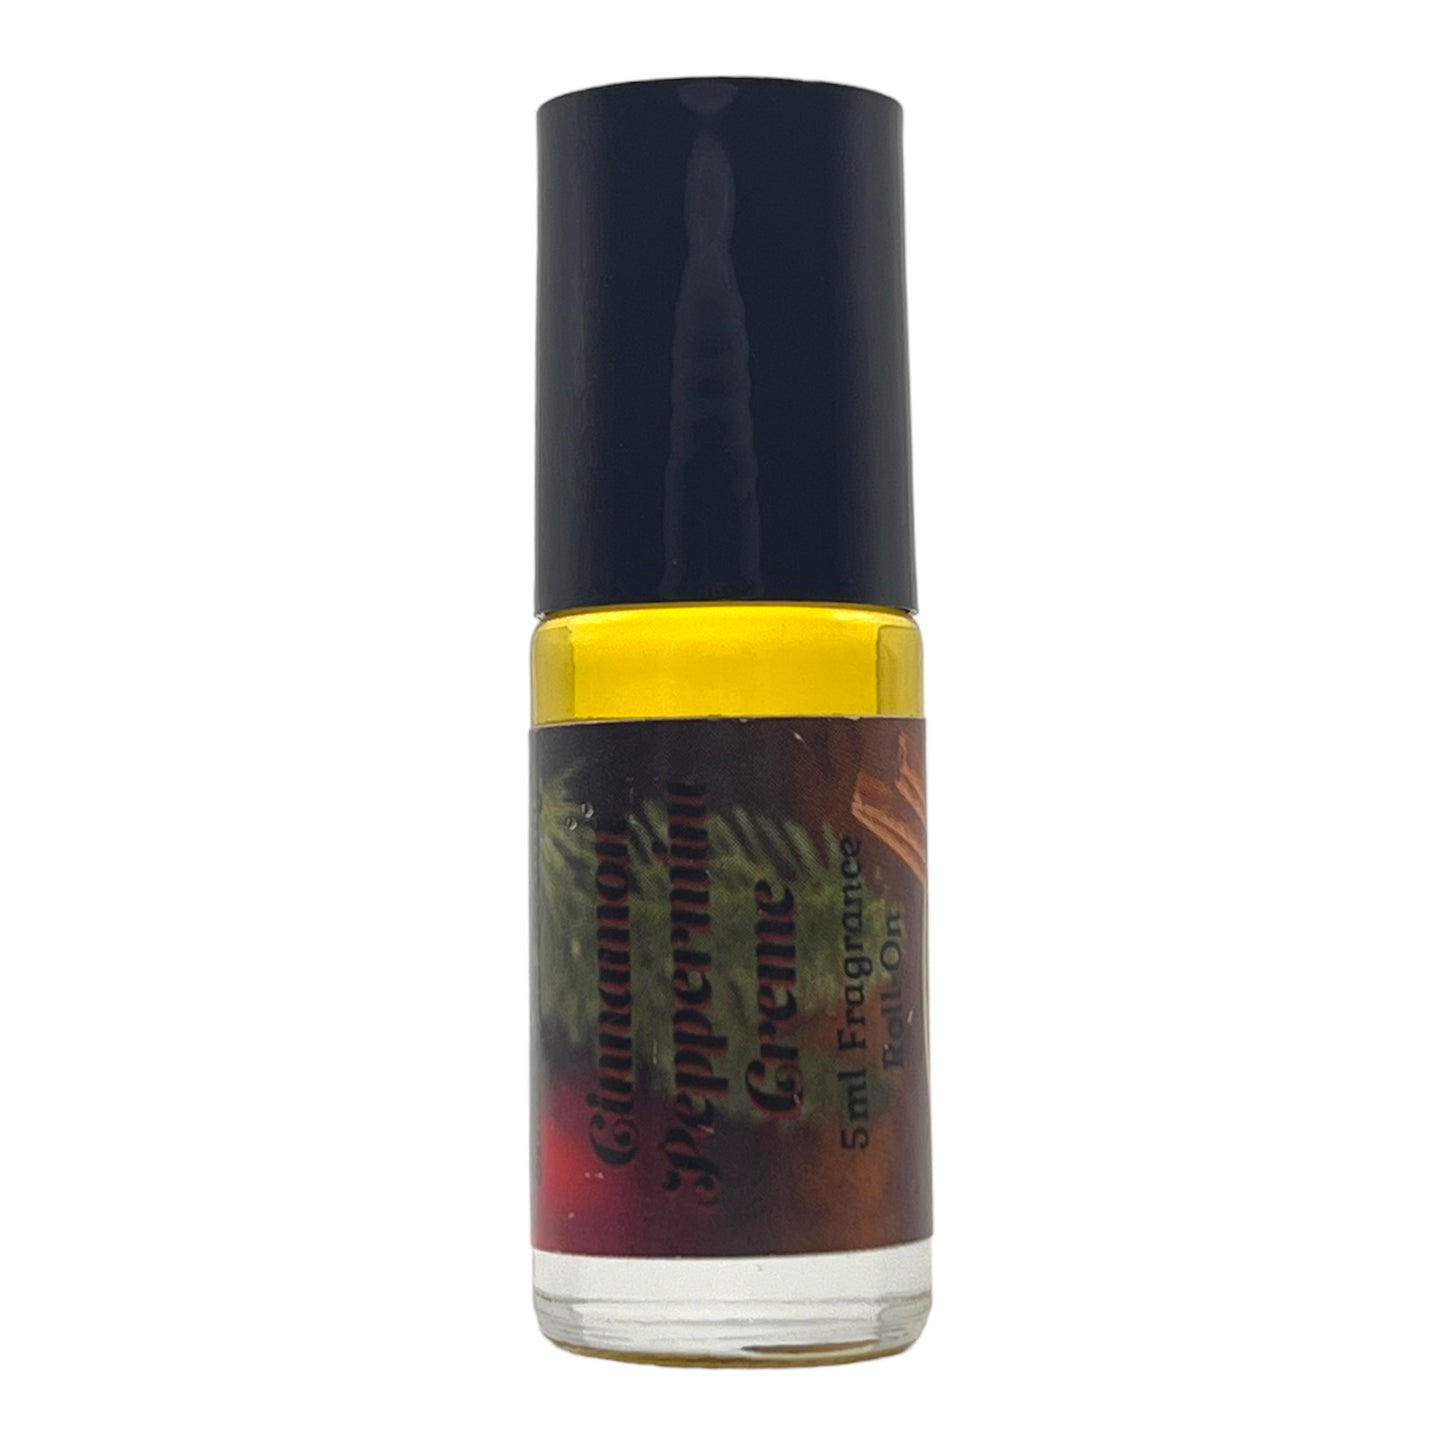 Cinnamon Peppermint Creme Perfume Oil Fragrance Roll On